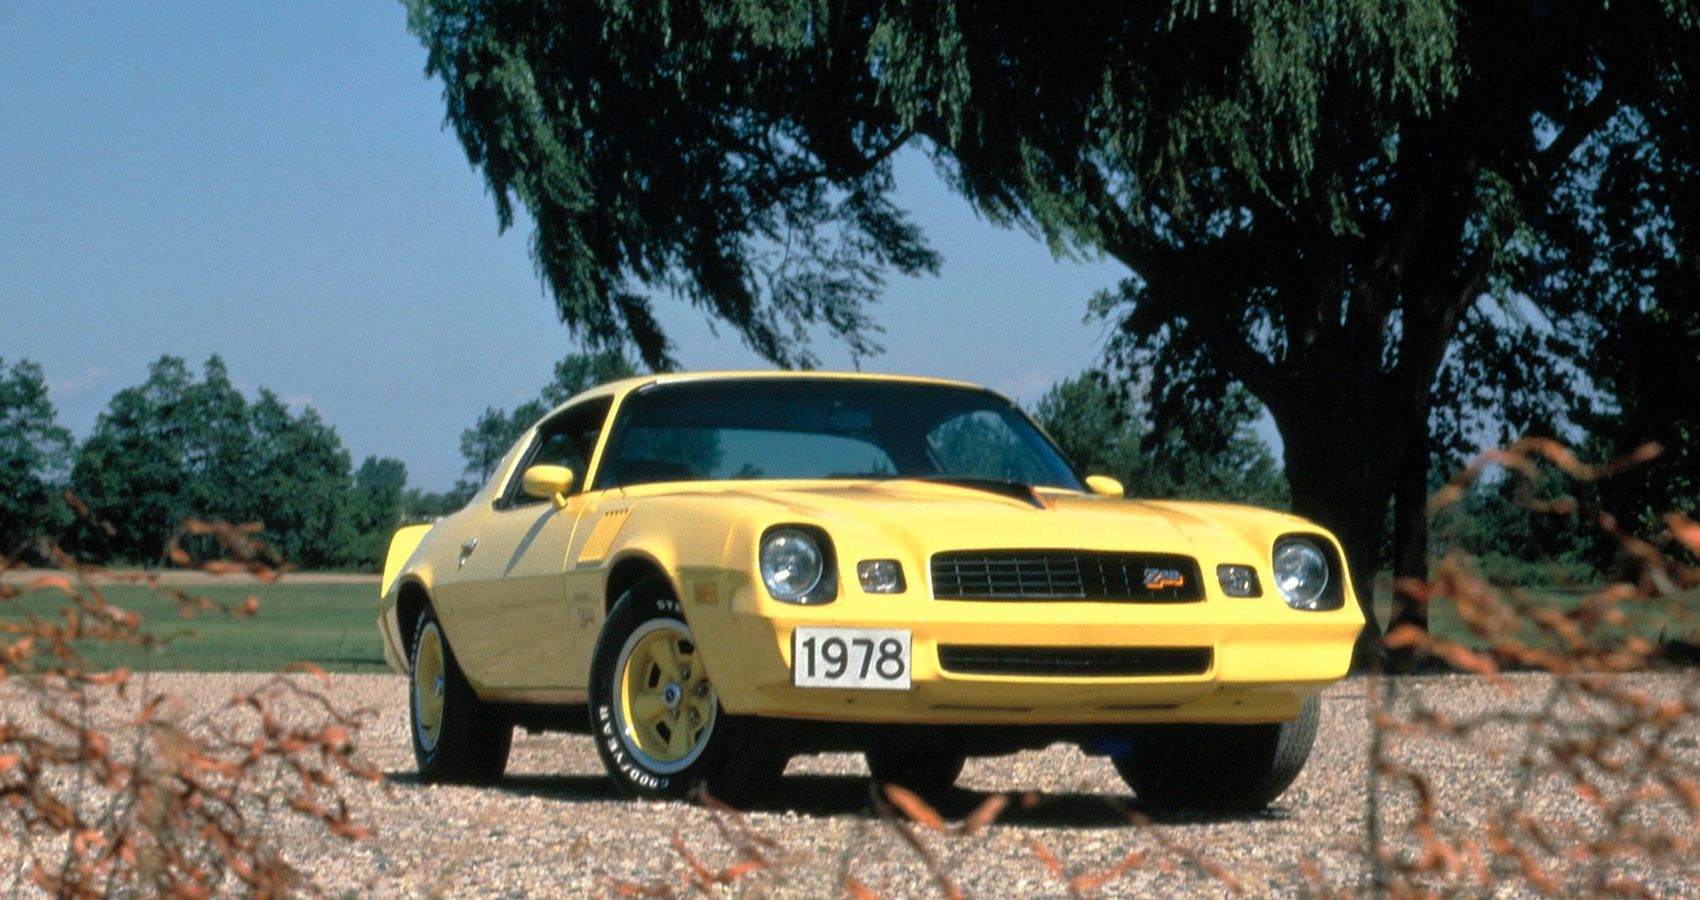 1978 Chevrolet Camaro yellow front view